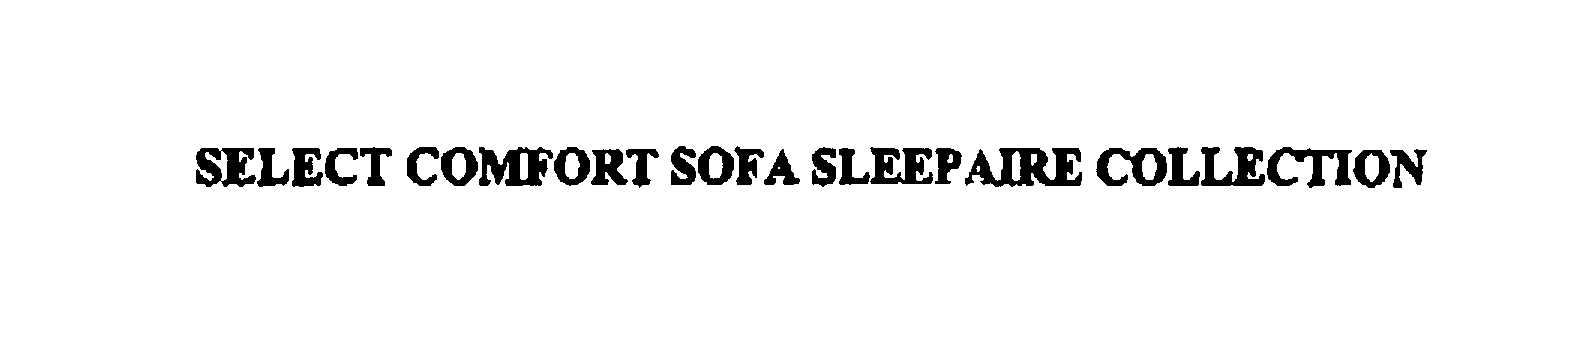  SELECT COMFORT SOFA SLEEPAIRE COLLECTION